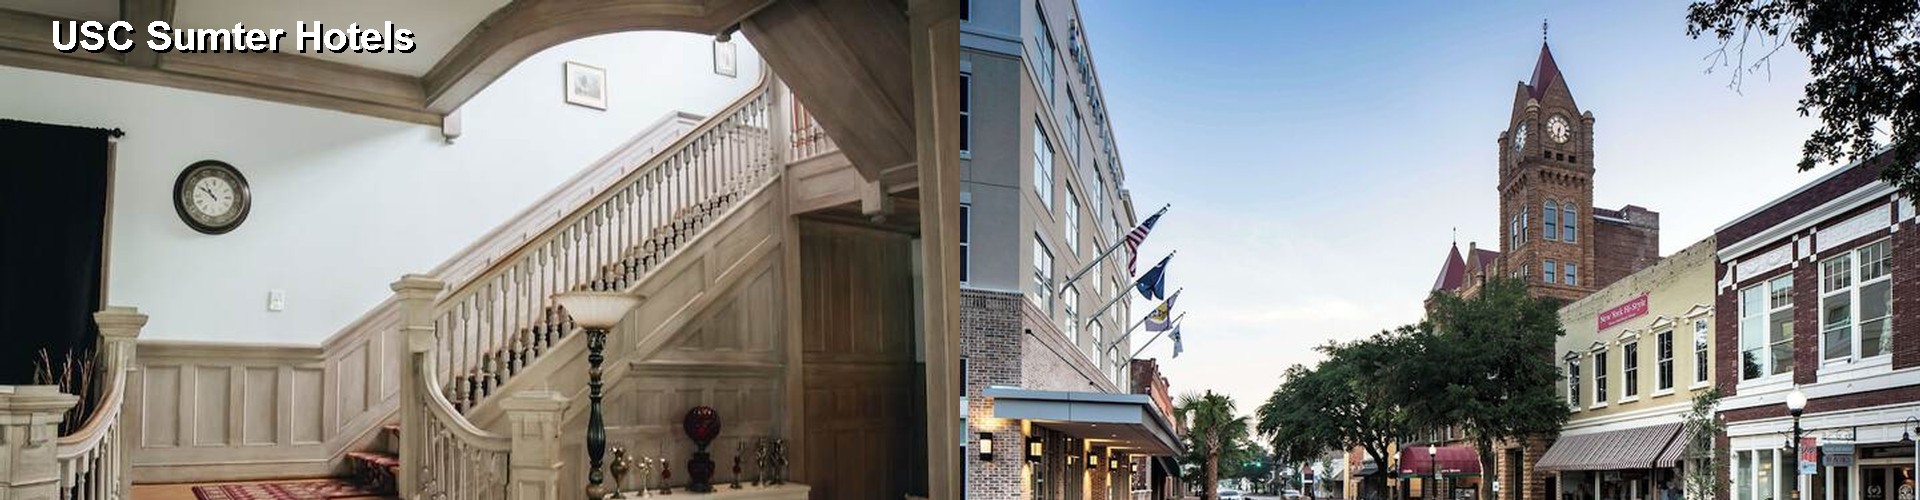 4 Best Hotels near USC Sumter